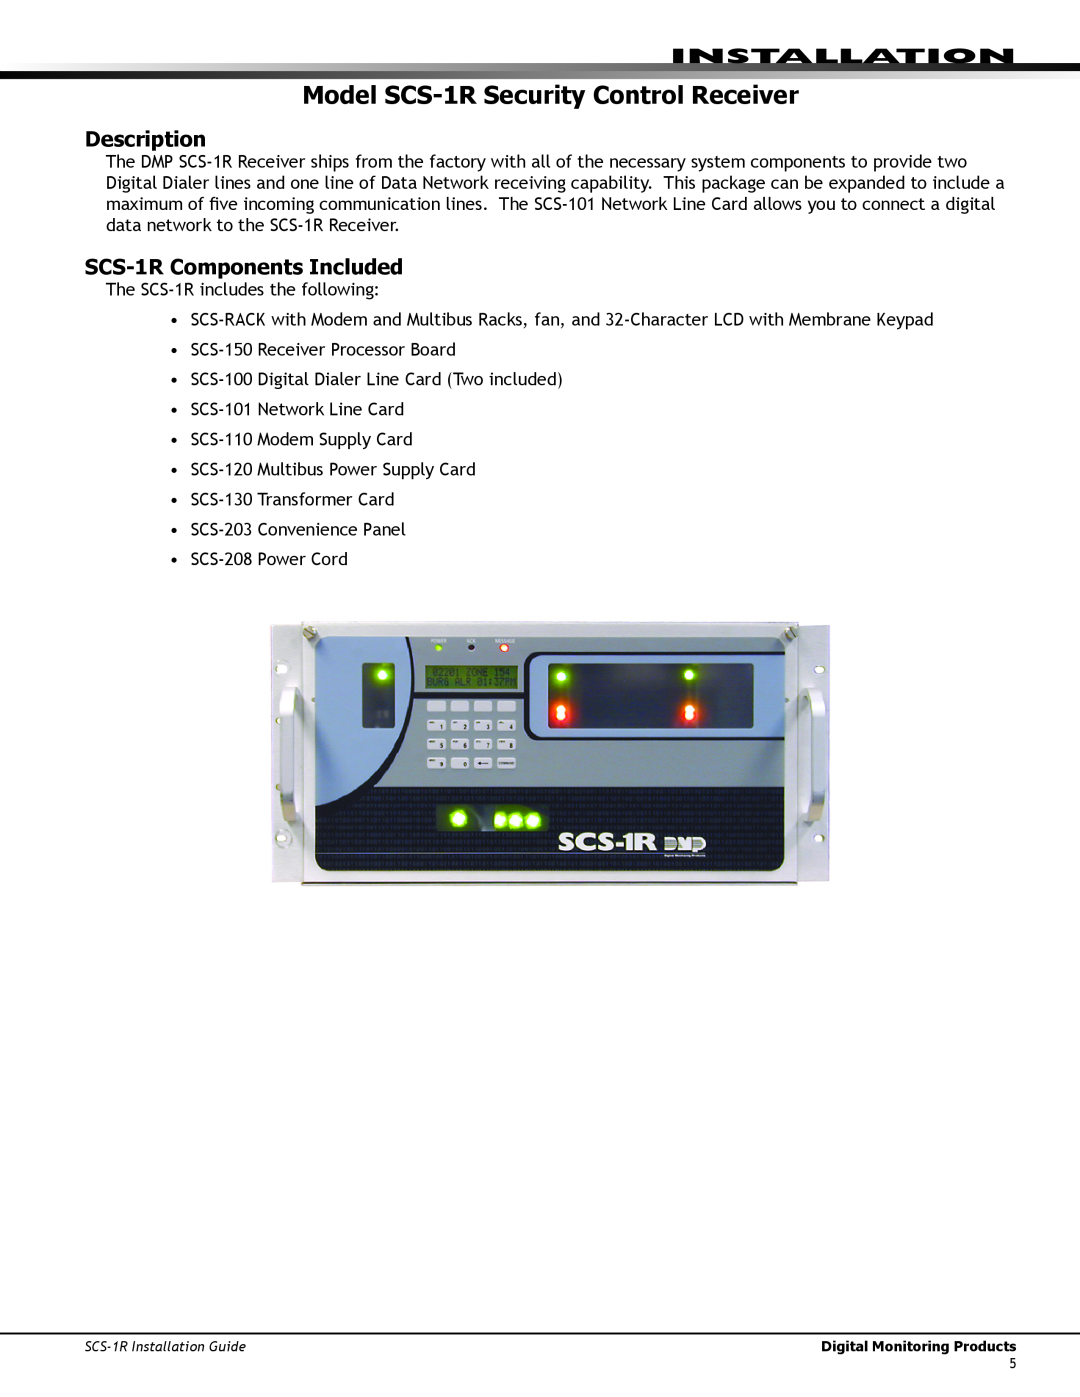 DMP Electronics manual Model SCS-1RSecurity Control Receiver, Installation, SCS-1RComponents Included, Description 